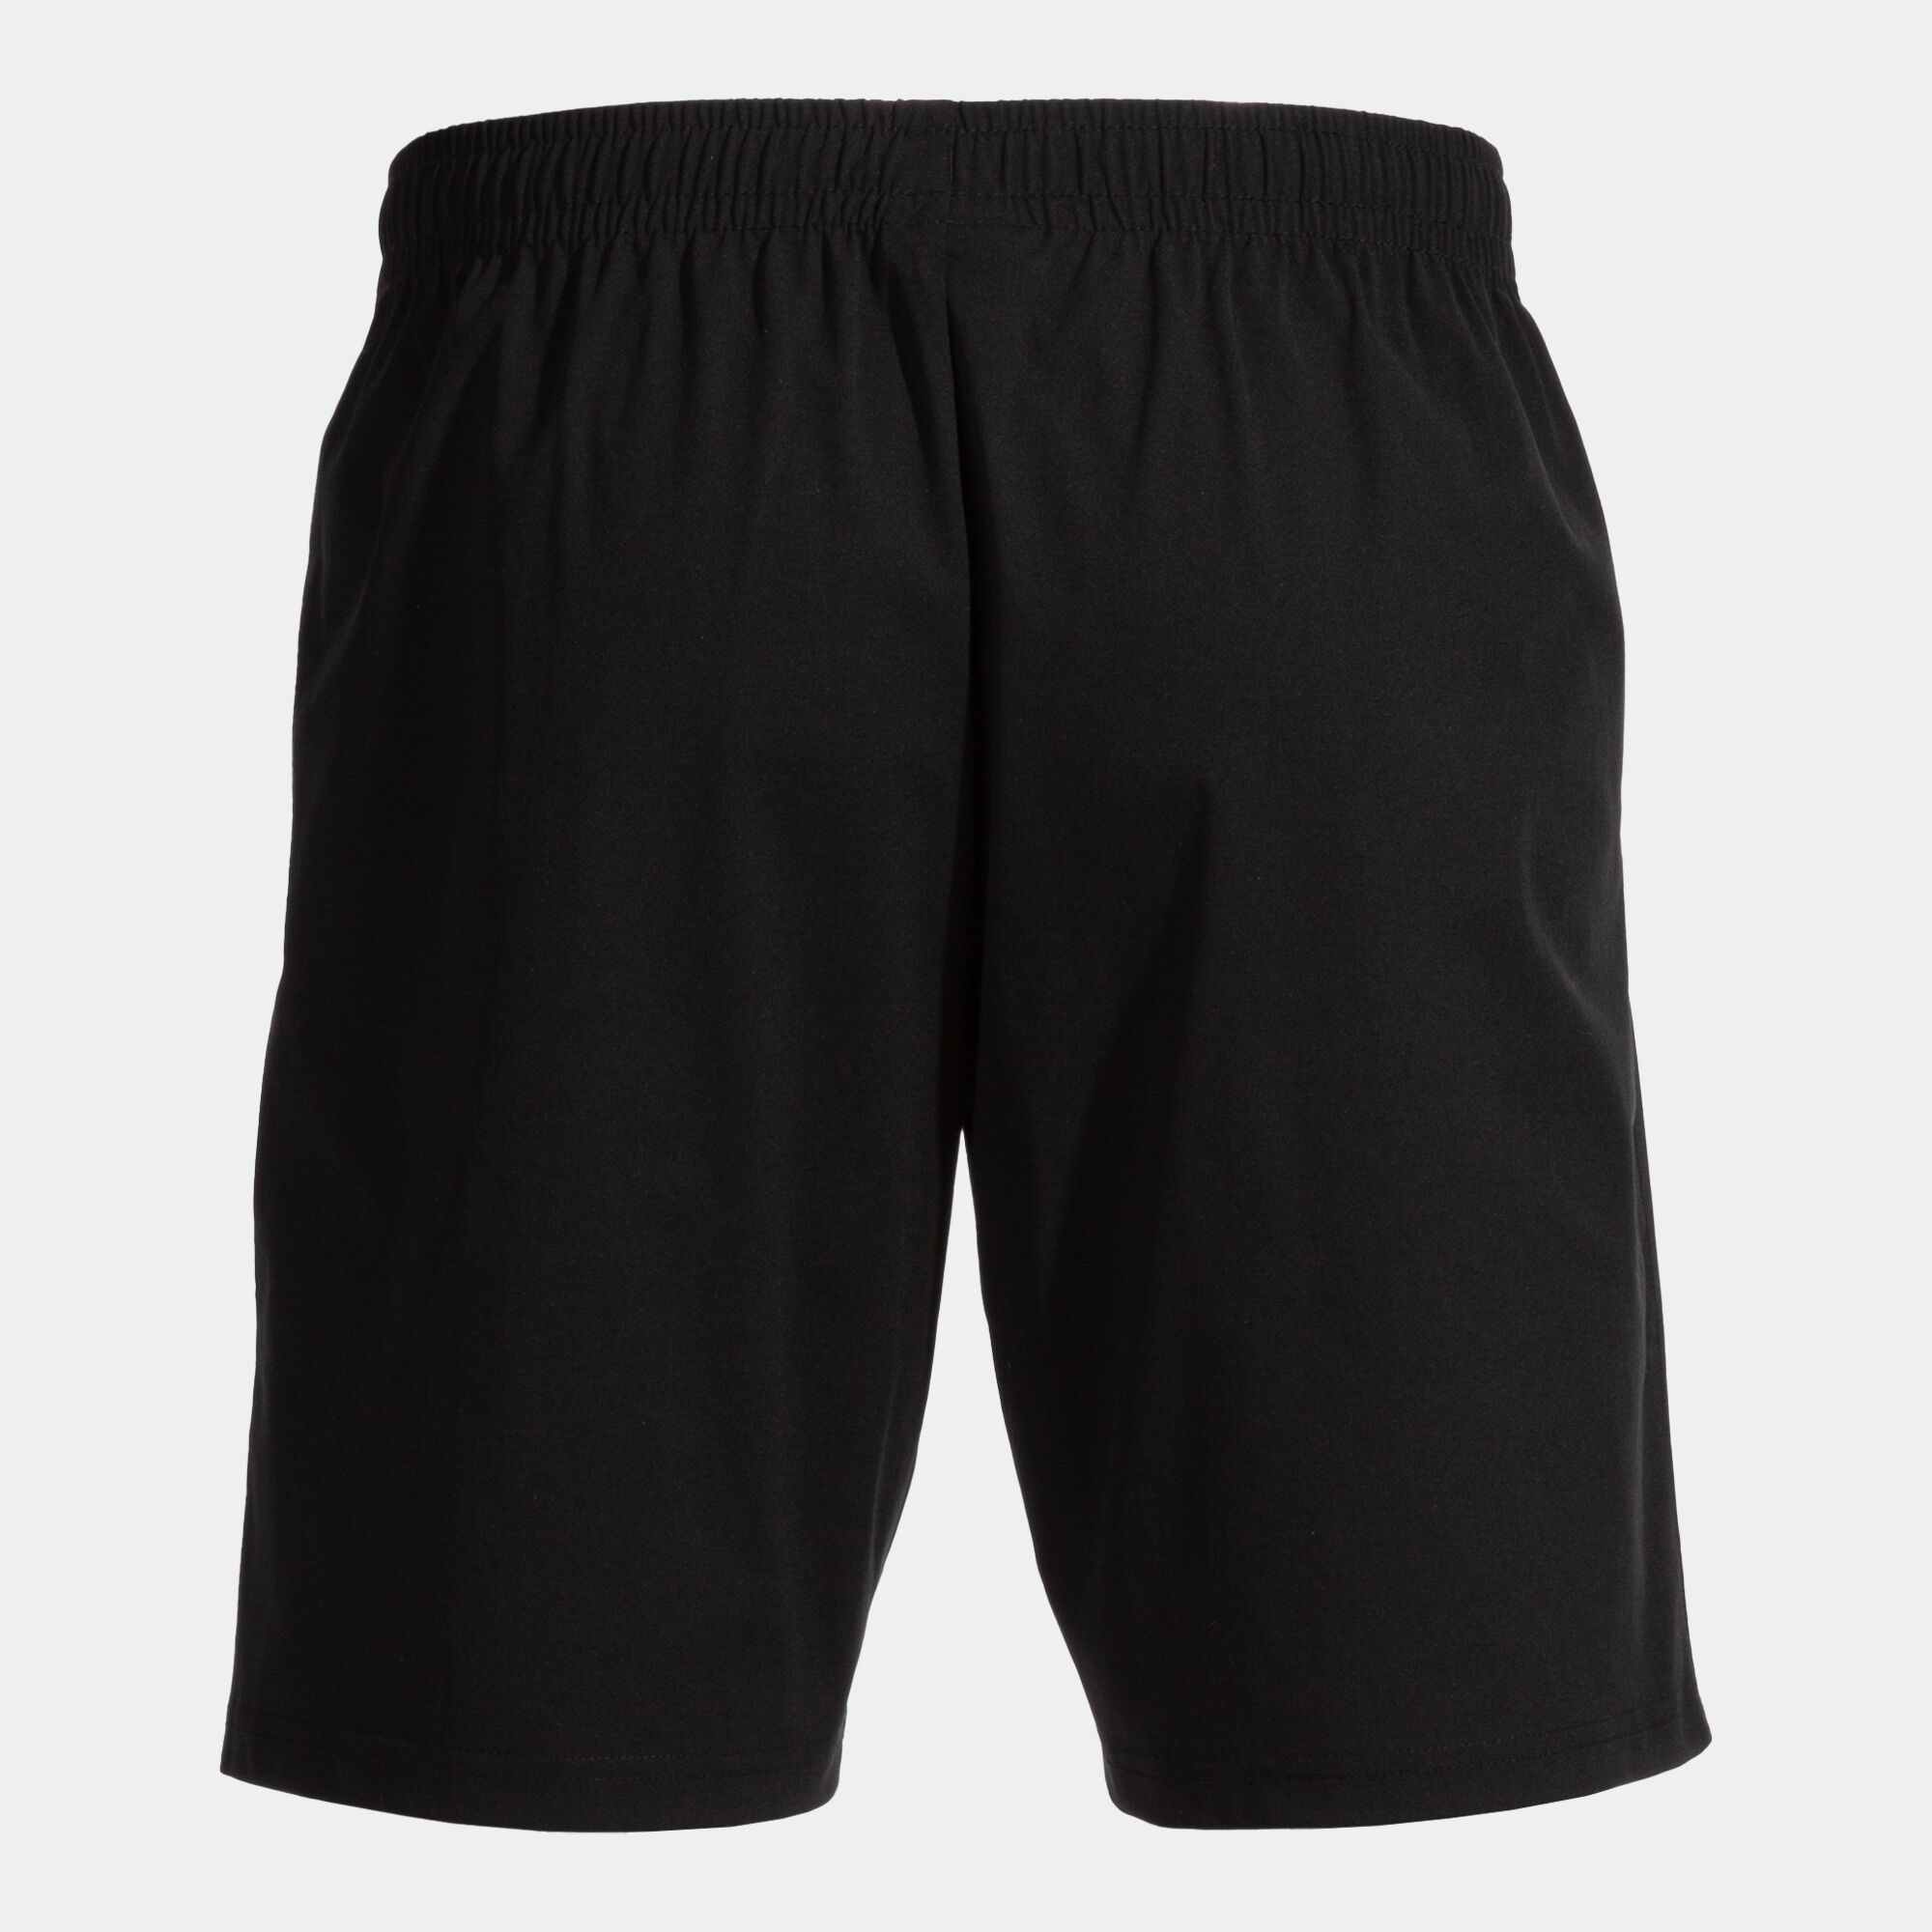 Bermuda shorts man Combi black